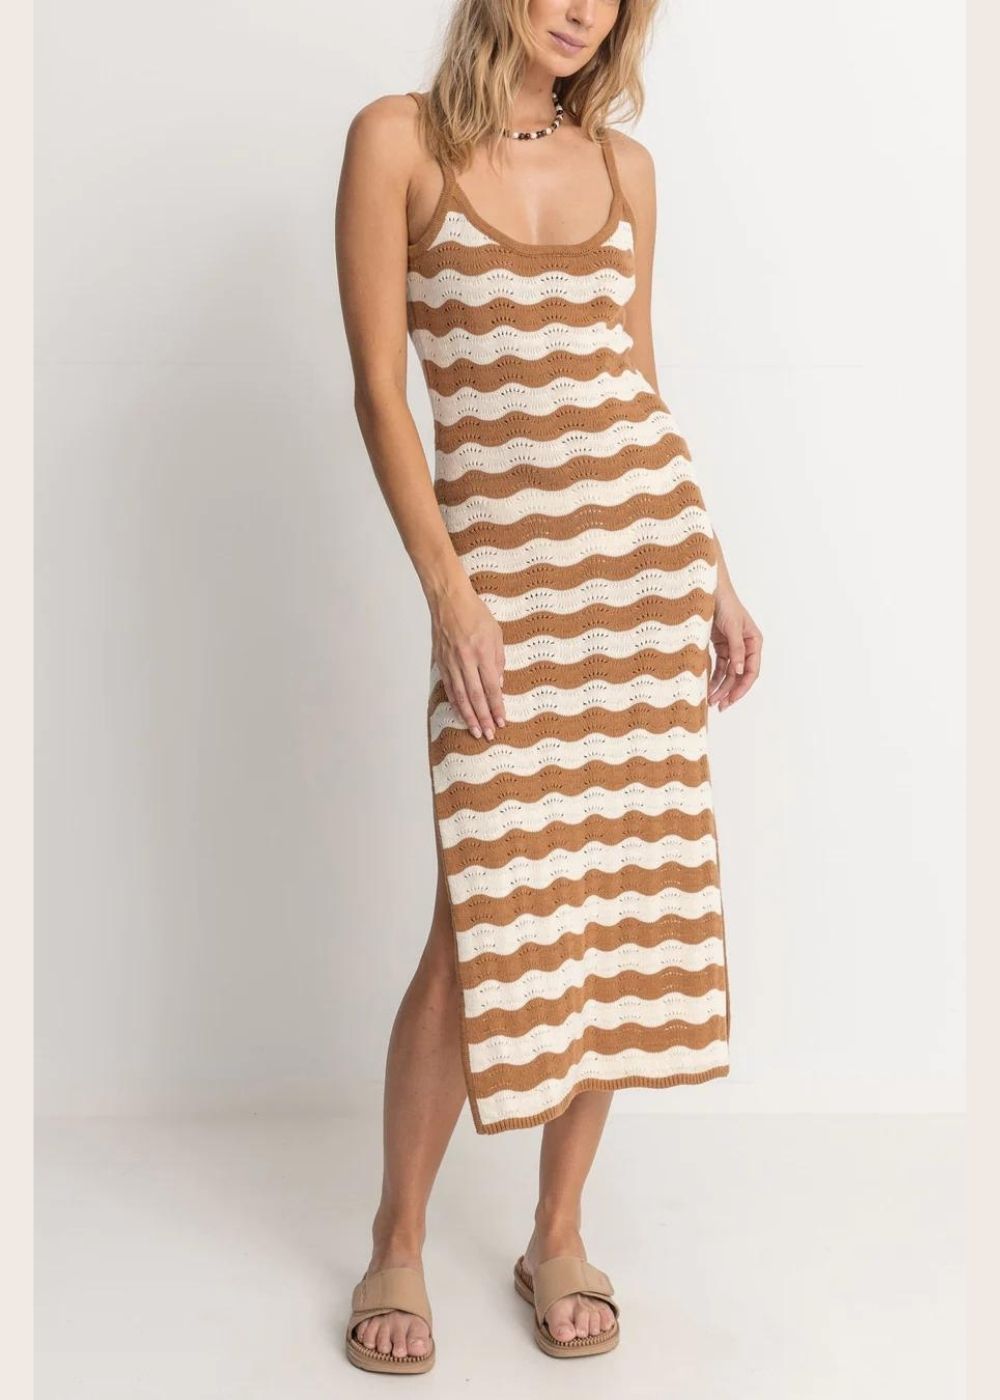 Sunny Knit Midi Dress - שמלת קרושה חום/לבן מידי